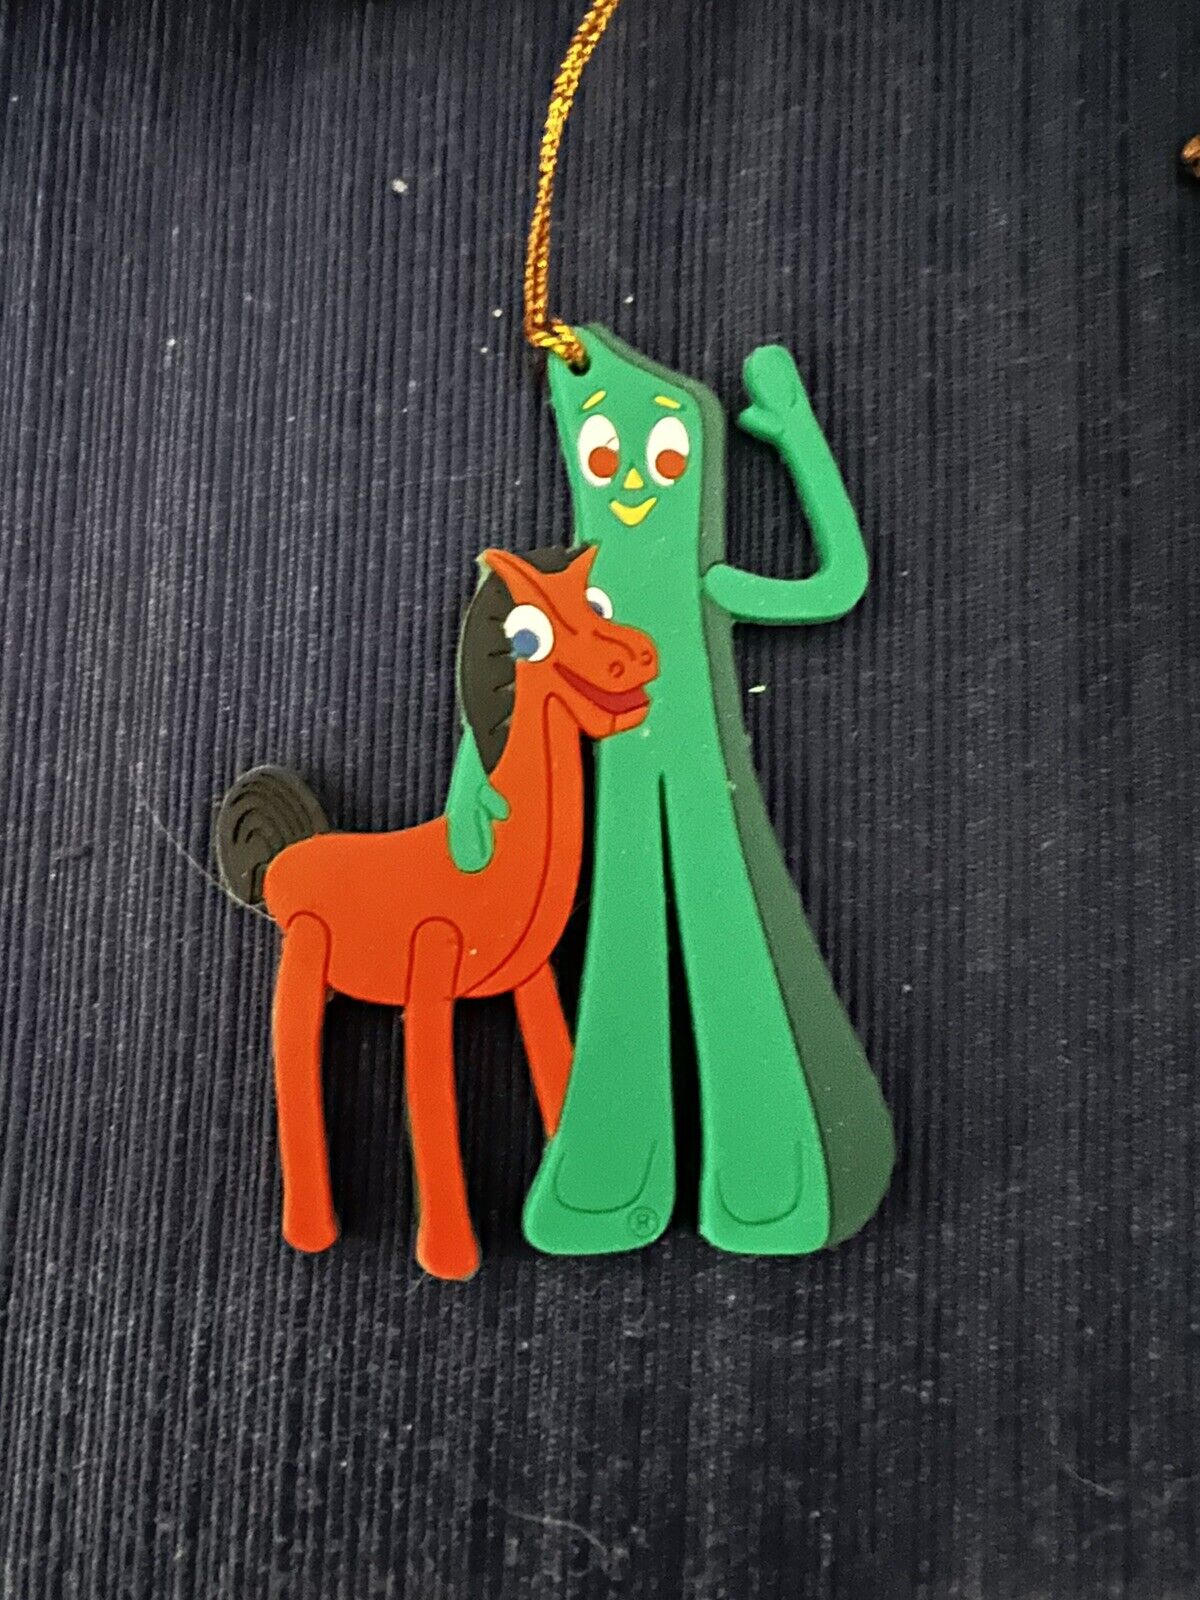 Gumby & Pokey Christmas Ornament. Cute